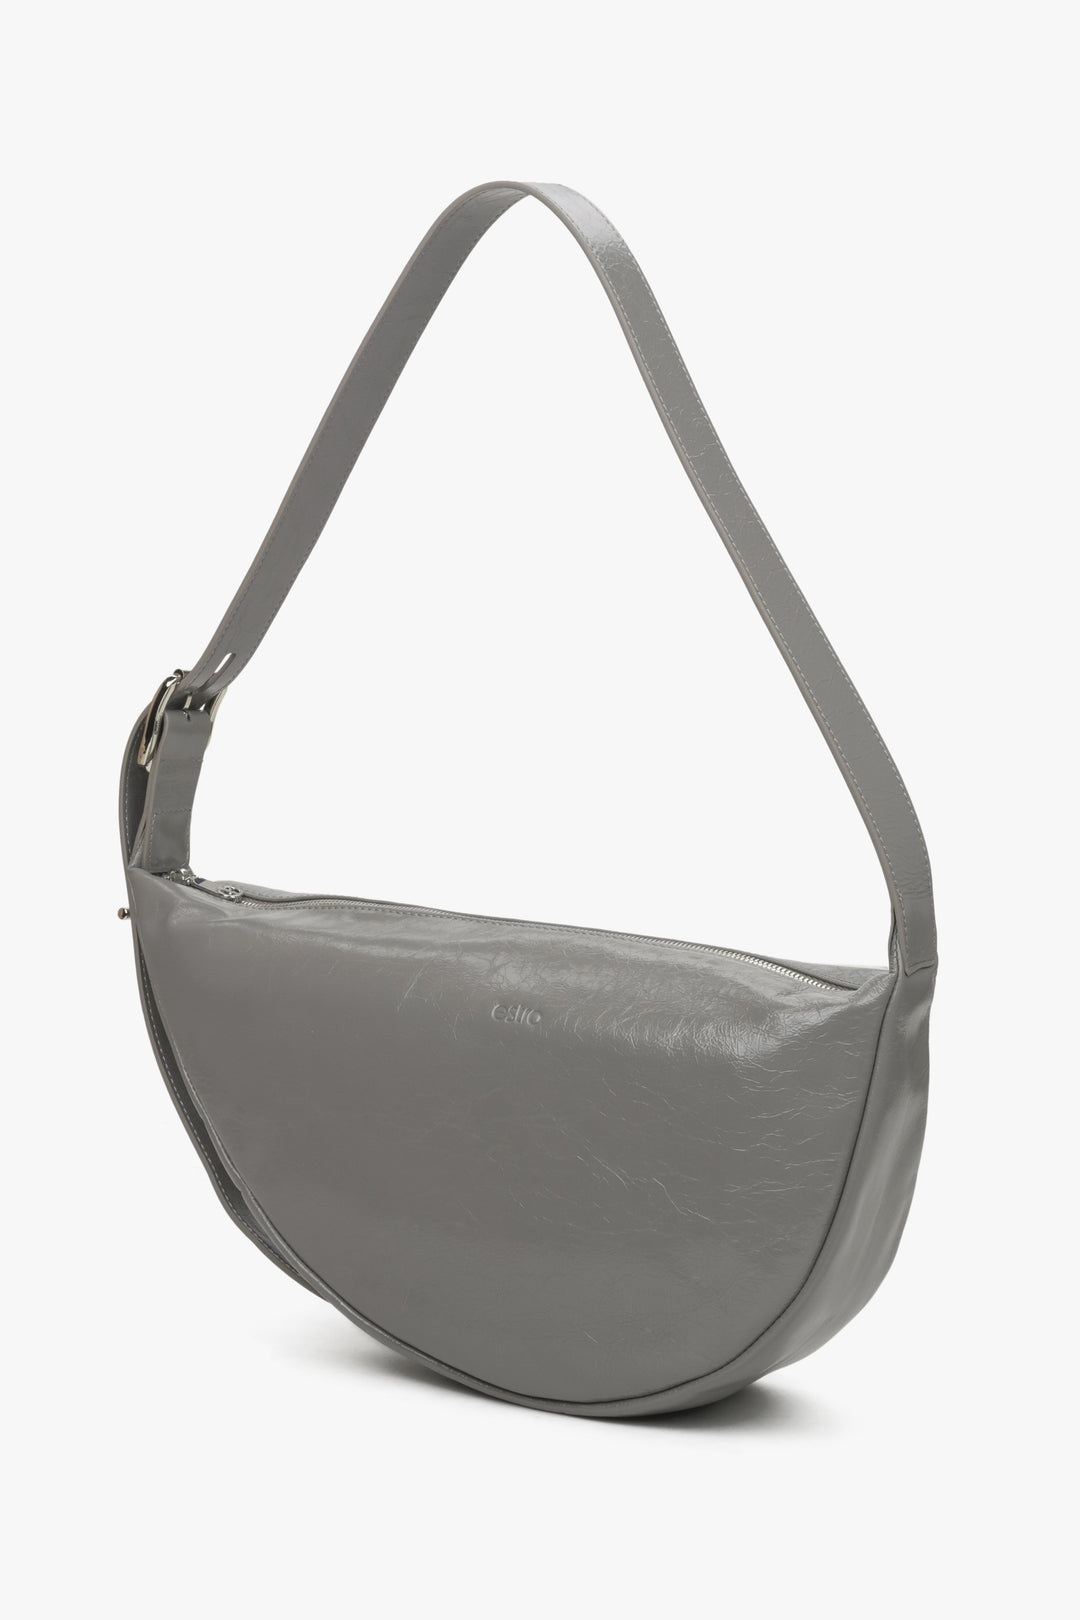 Women's grey leather Estro handbag - front view of the model.